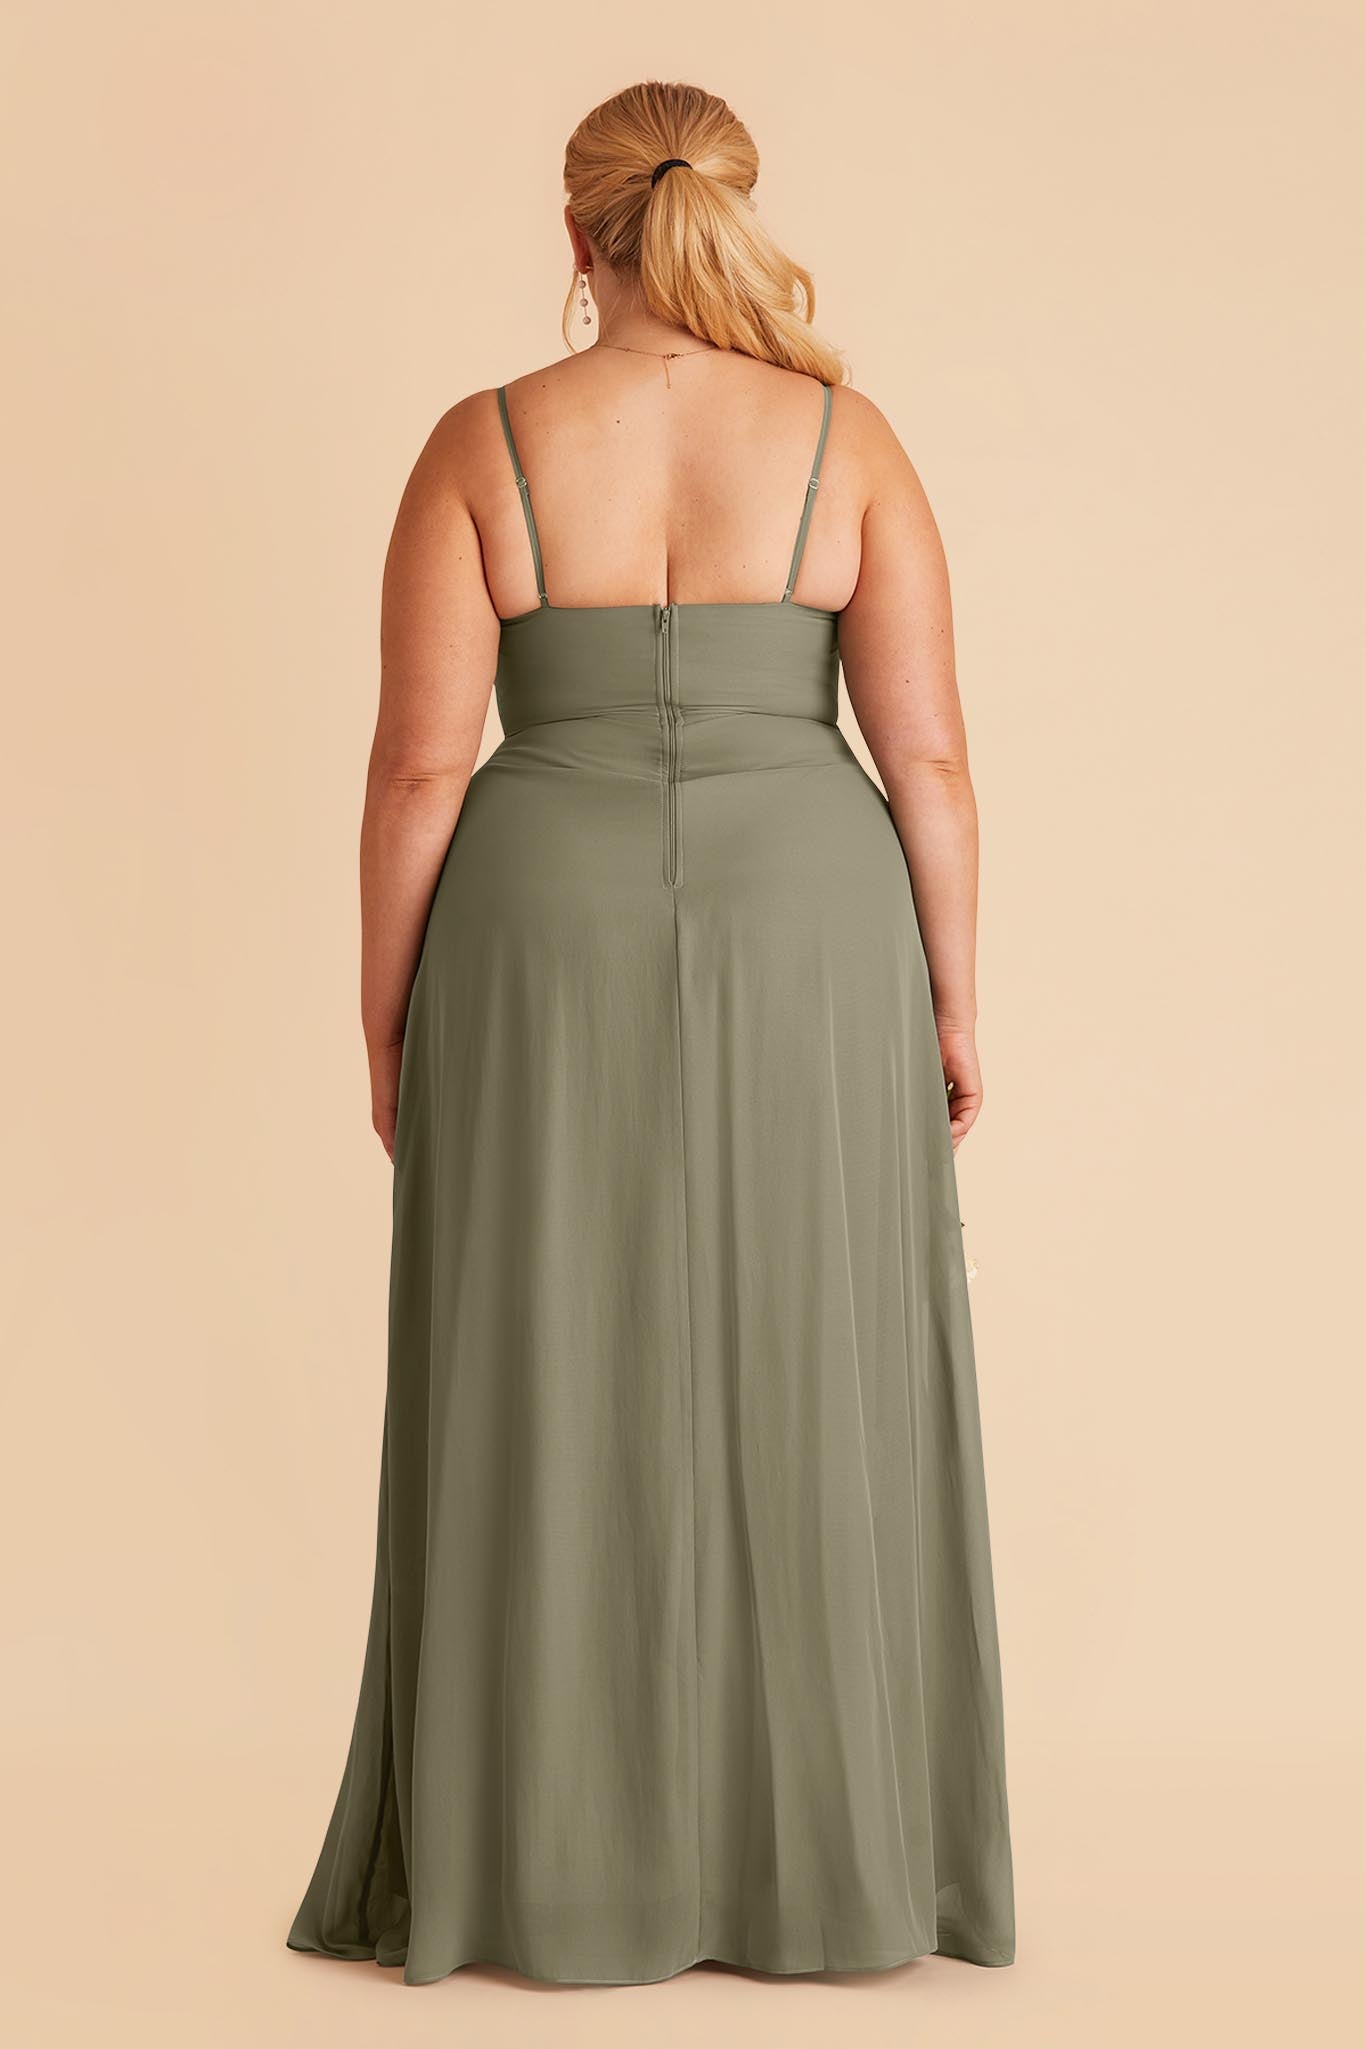 Moss Green Amy Chiffon Dress by Birdy Grey